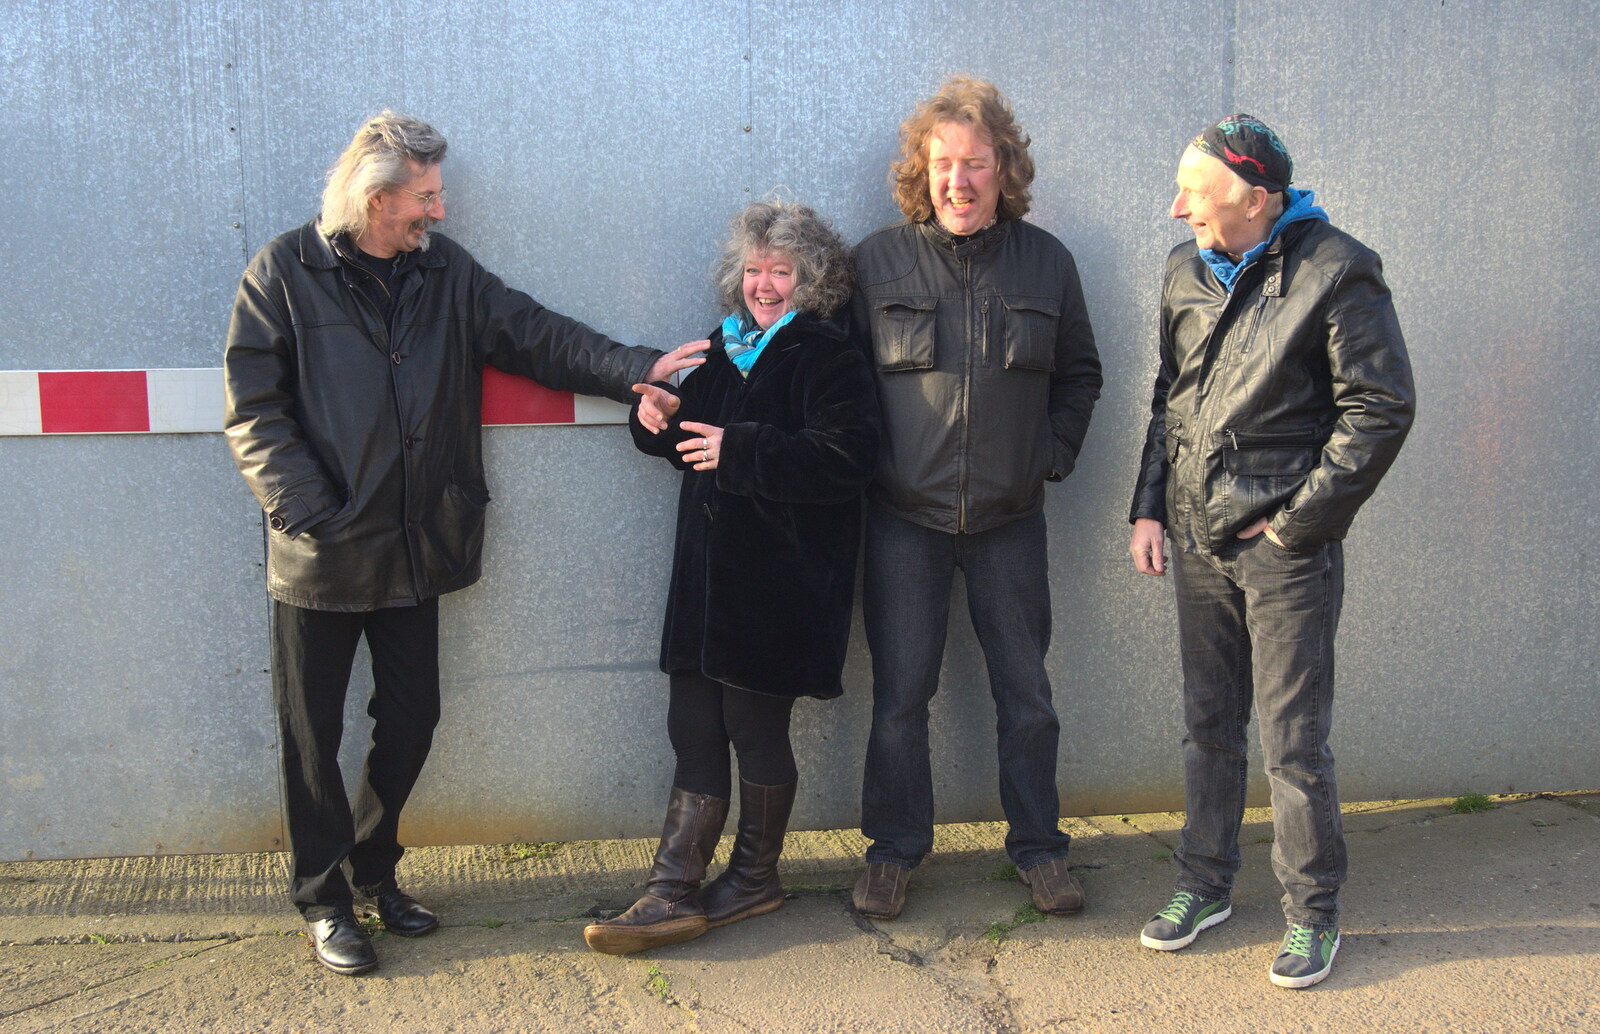 A change of scene from The BBs Photo Shoot, BOCM Pauls Pavilion, Burston, Norfolk - 12th January 2014